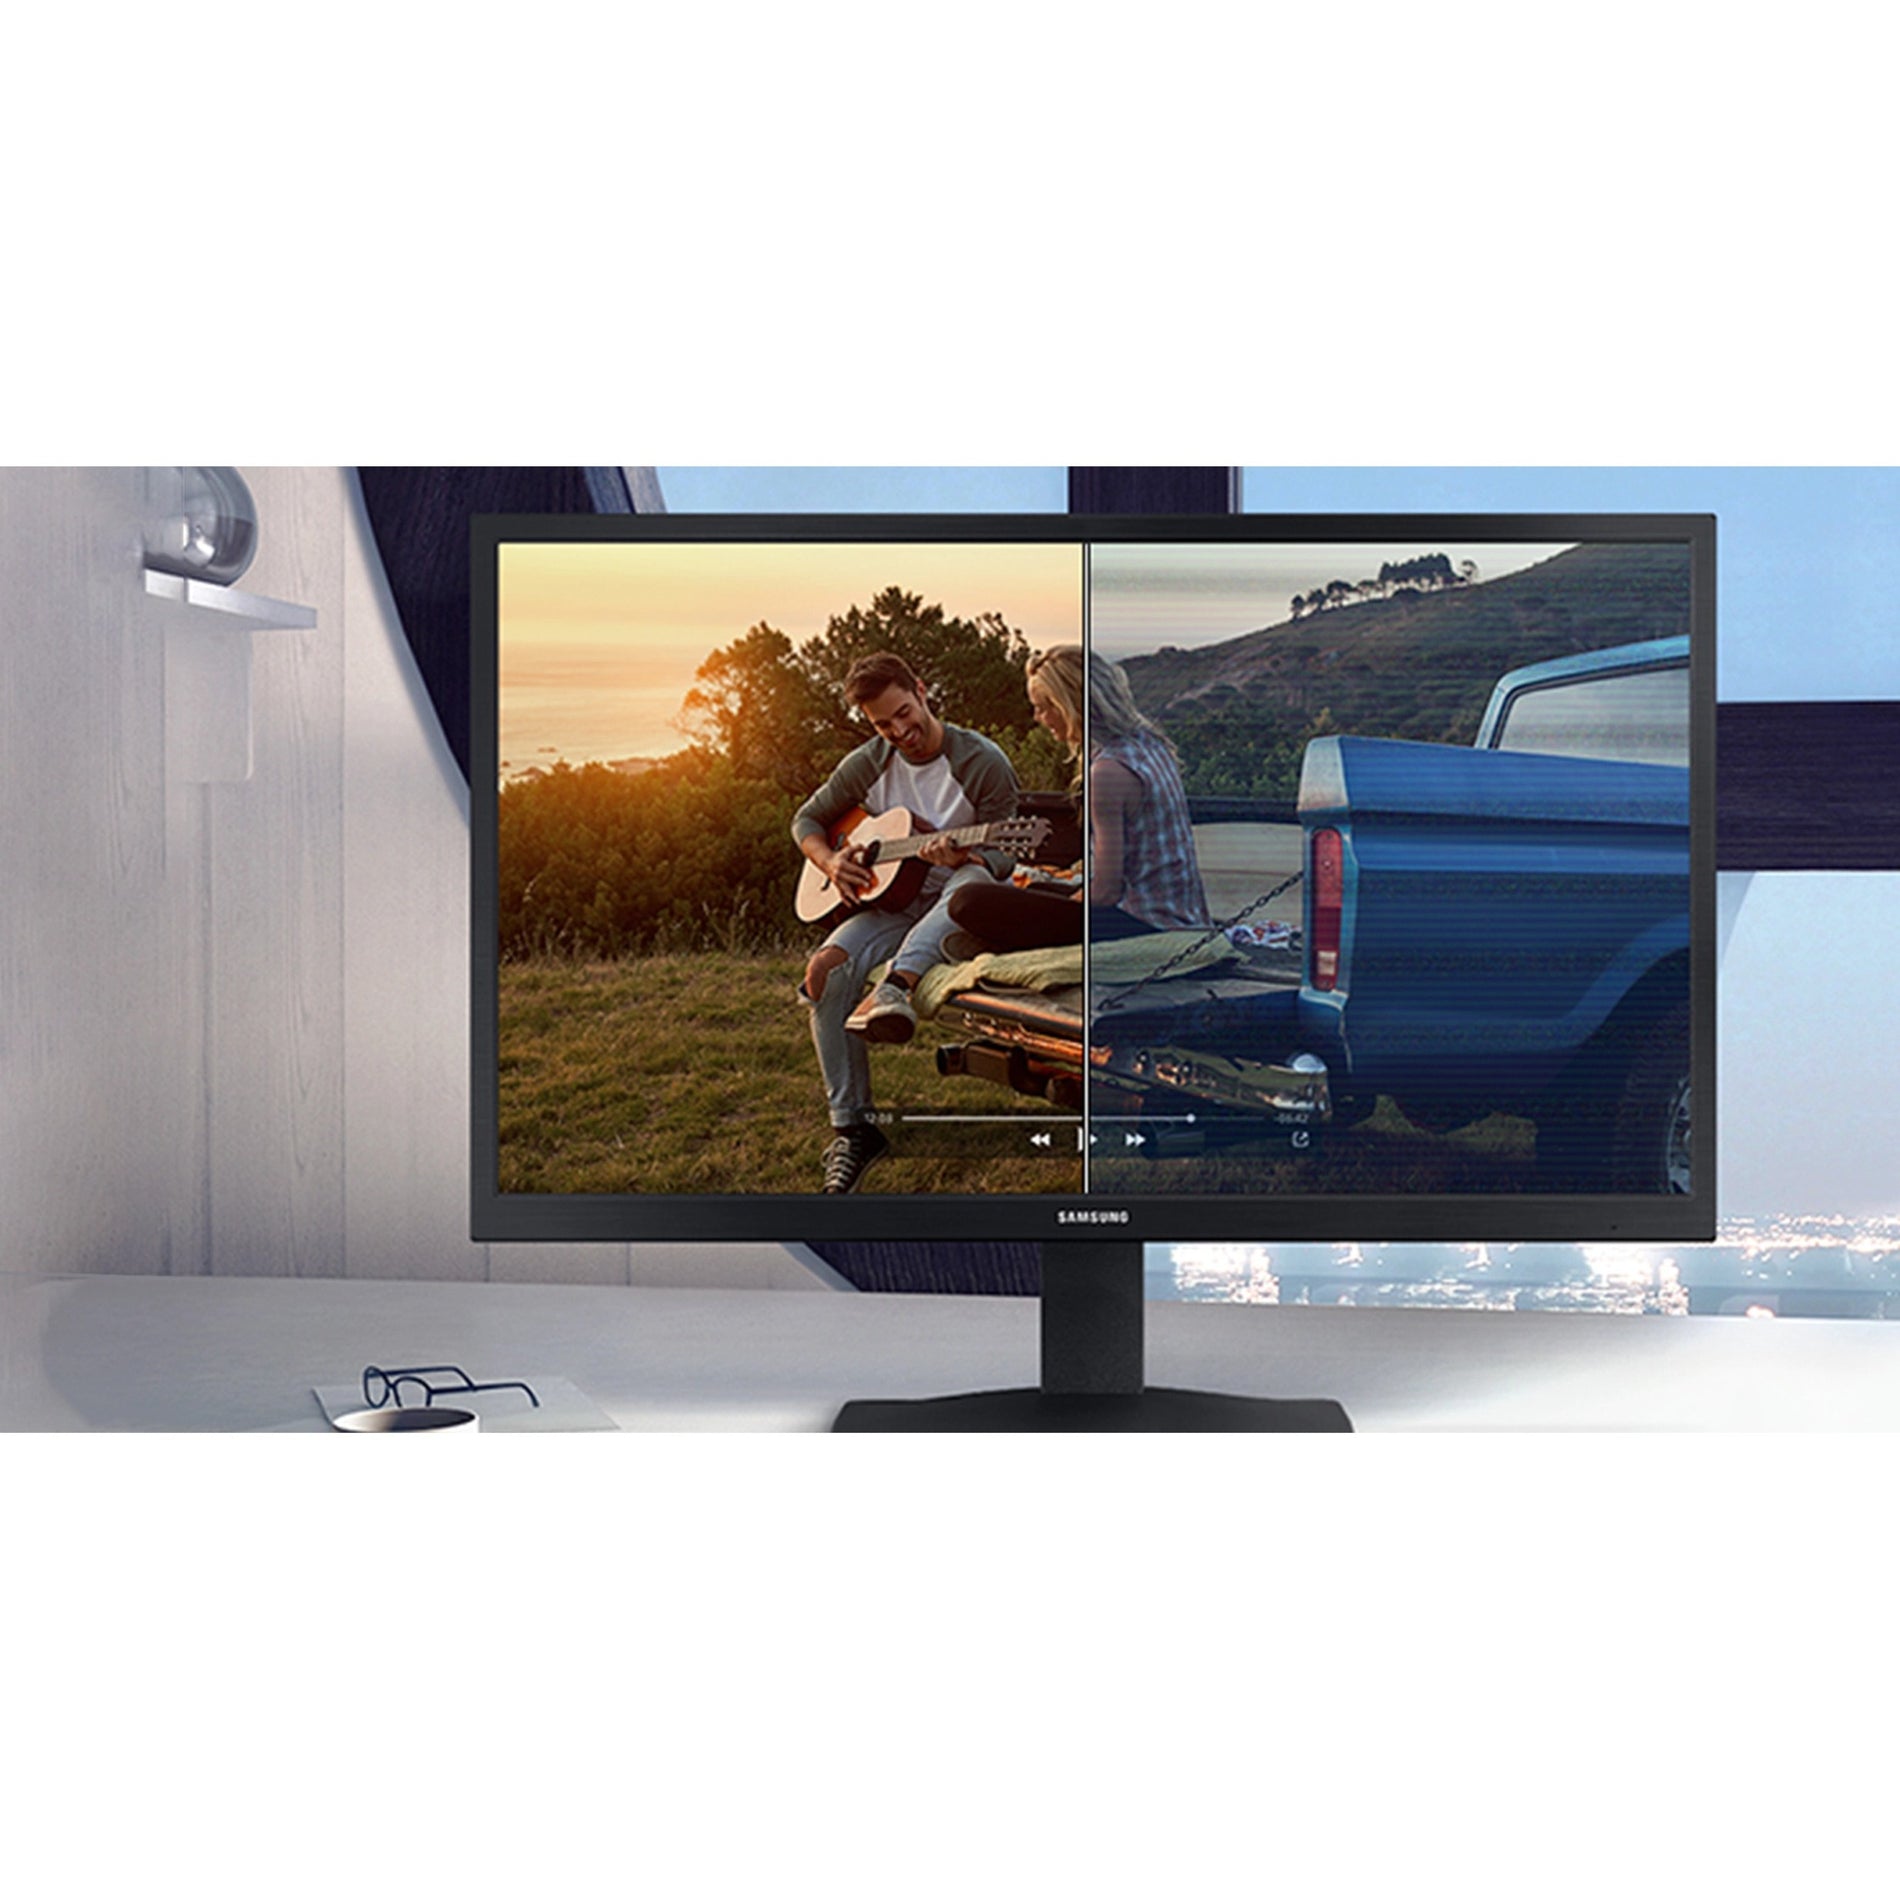 Samsung LS22A338NHNXZA Essential S22A338NHN 22" Full HD LCD Monitor, Flicker-free, Eye Saver Mode, 250 Nit Brightness, 72% NTSC Color Gamut, 16.7 Million Colors